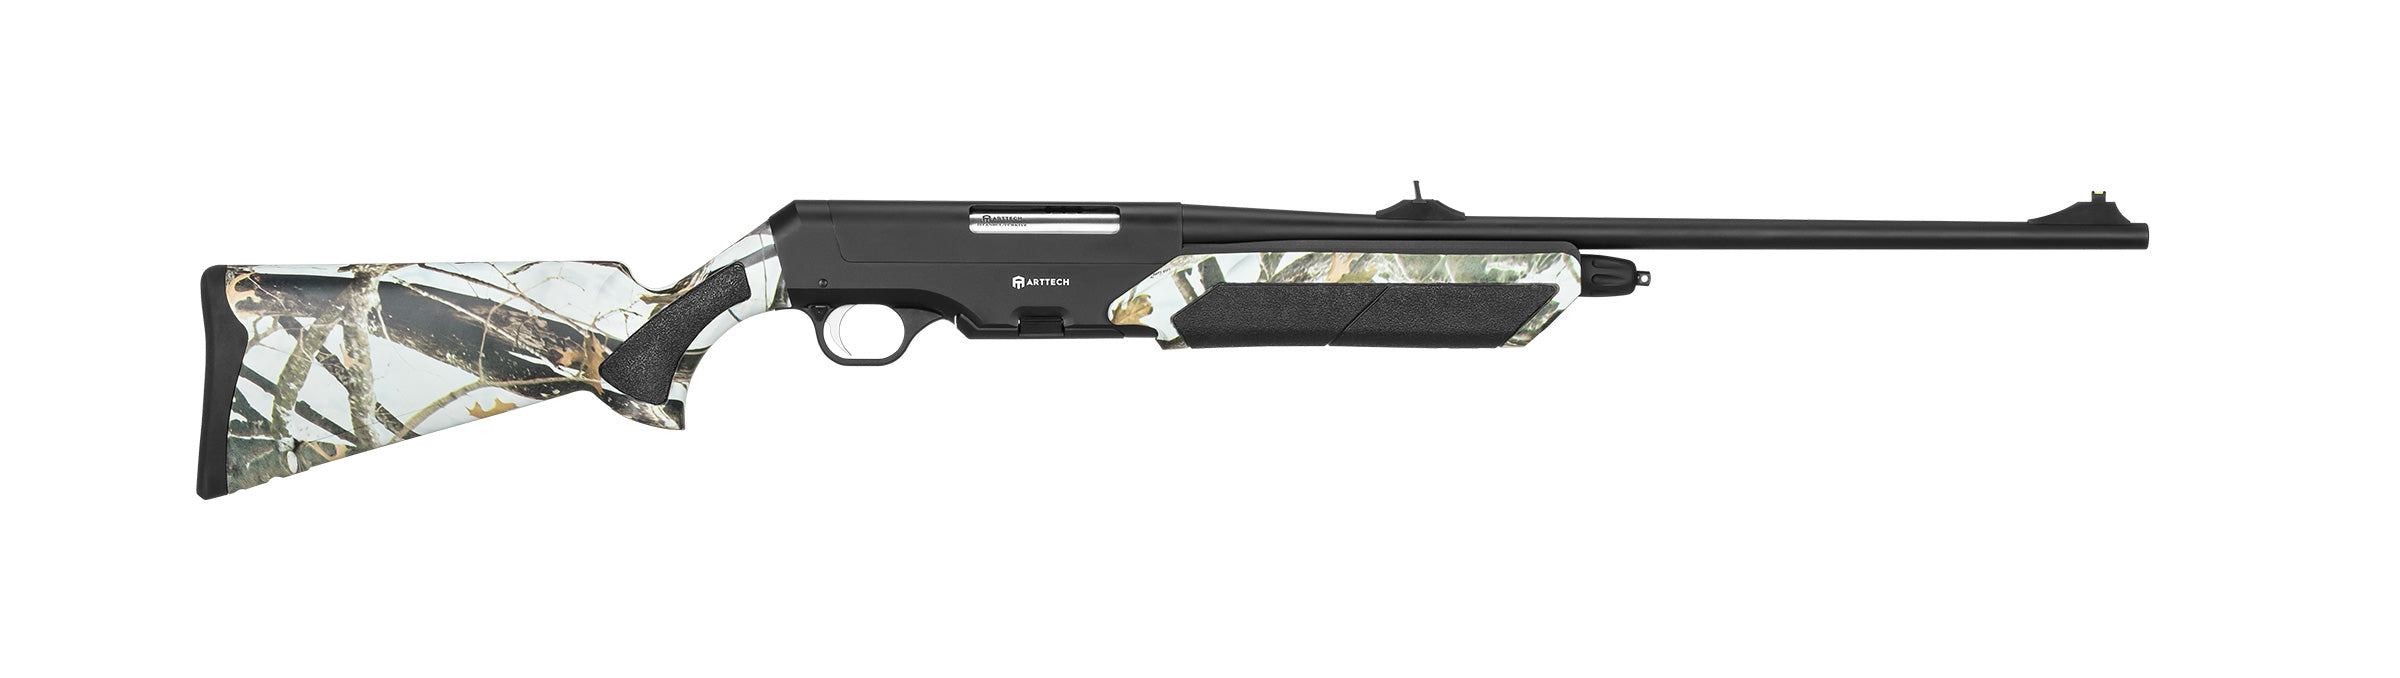 Prima XP Slide Hunting Rifle